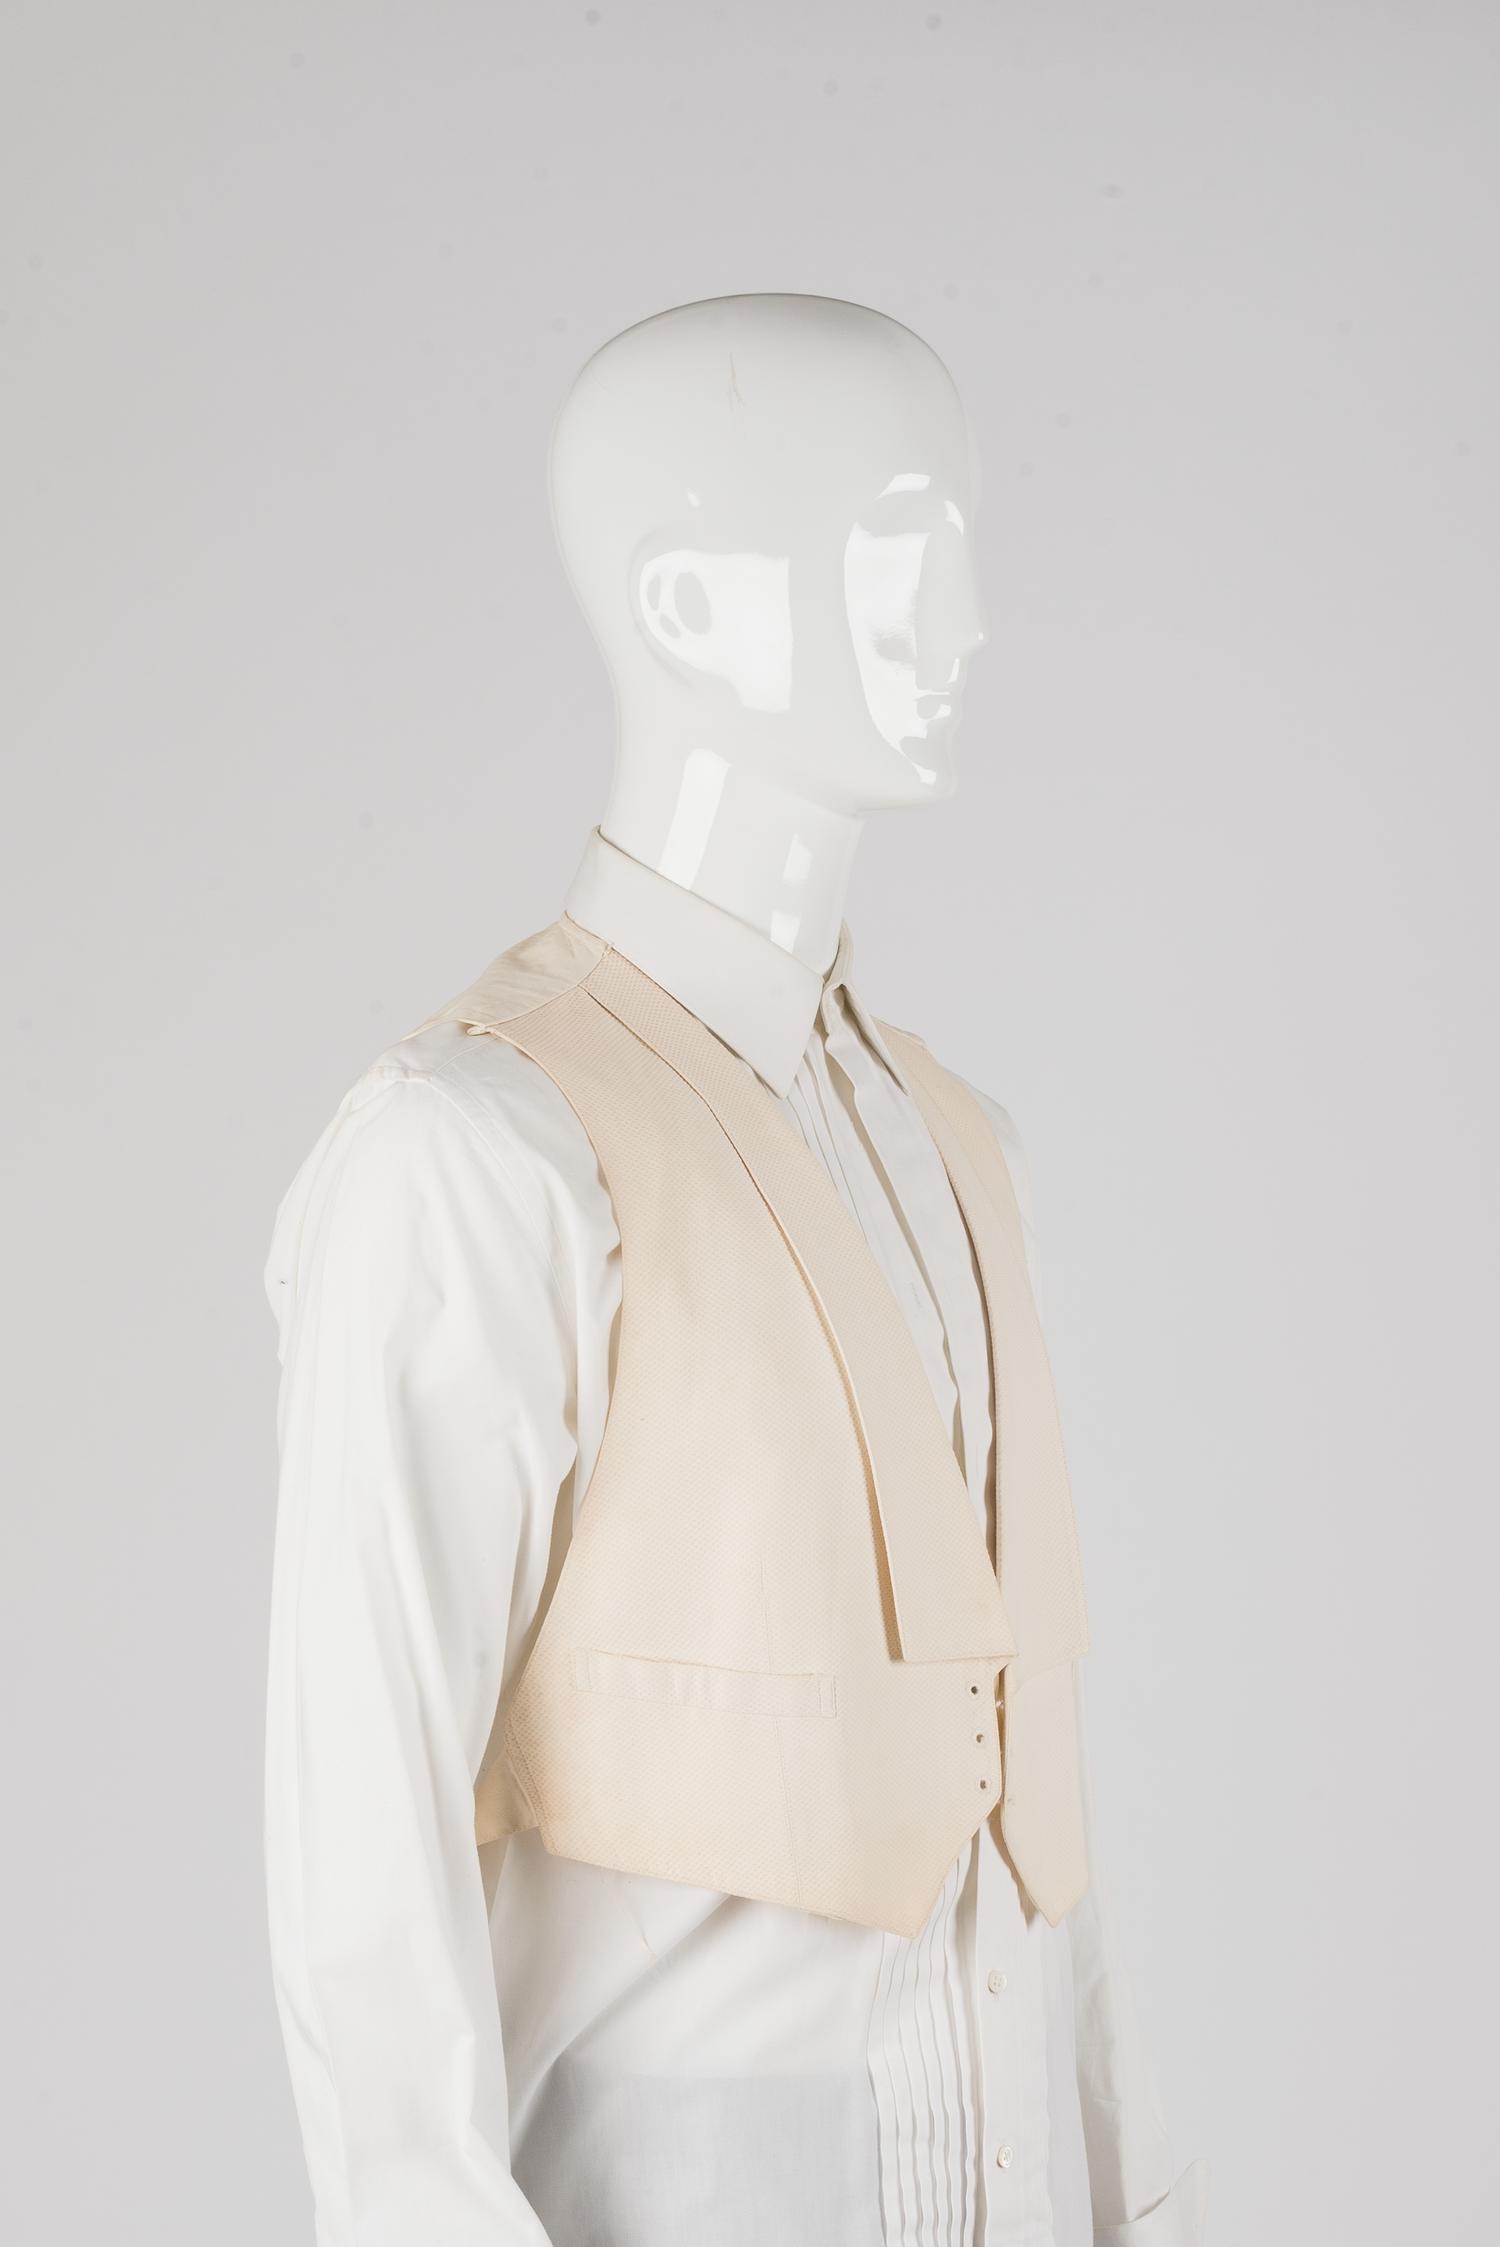 Tuxedo vest
                                                
                                                    [Sequence #]: 2 of 8
                                                